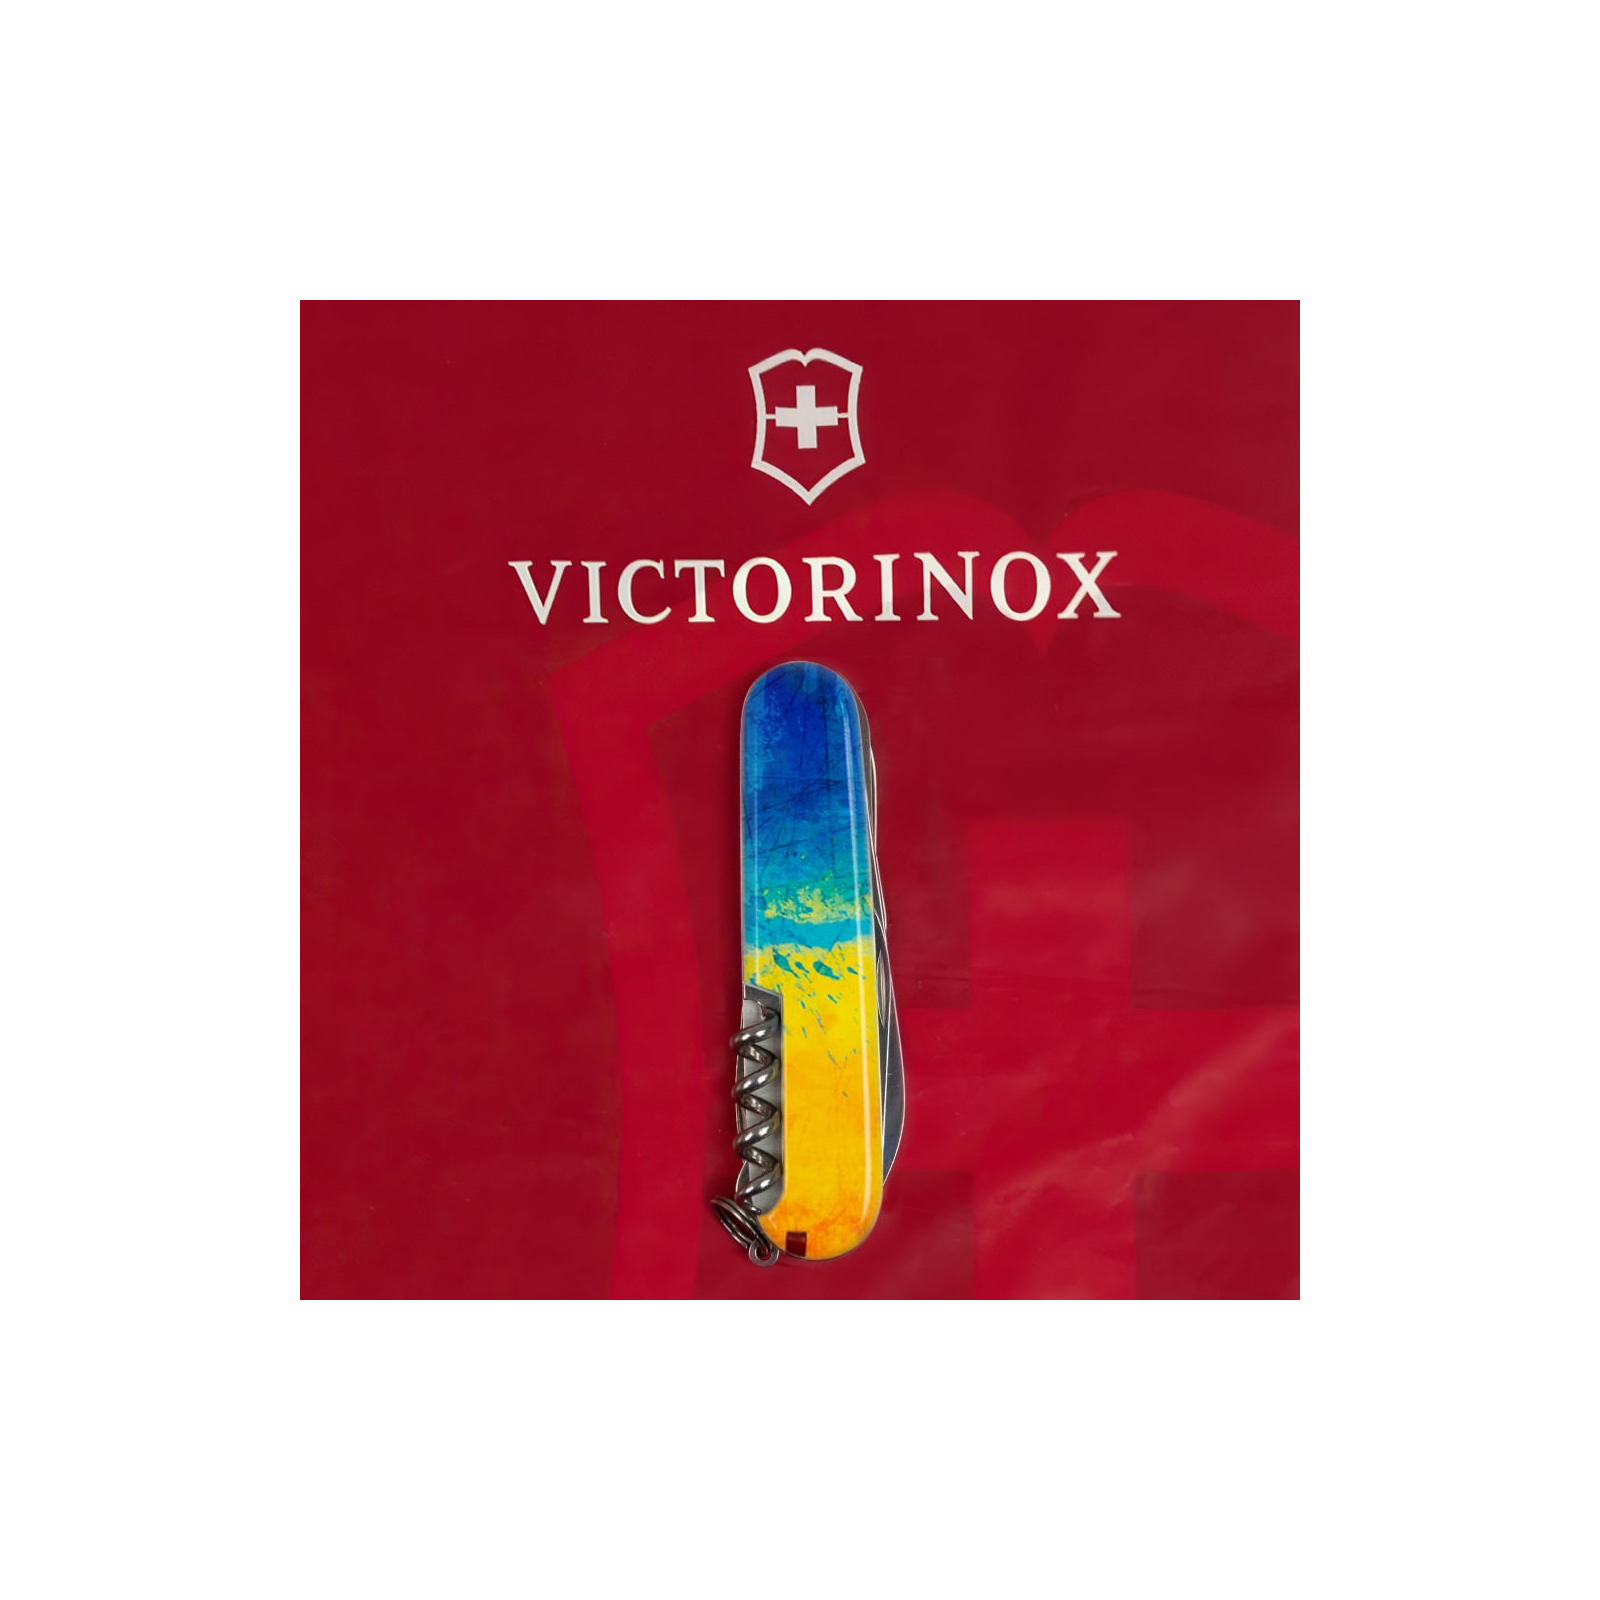 Нож Victorinox Huntsman Ukraine 91 мм Жовто-синій малюнок (1.3713.7_T3100p) изображение 10